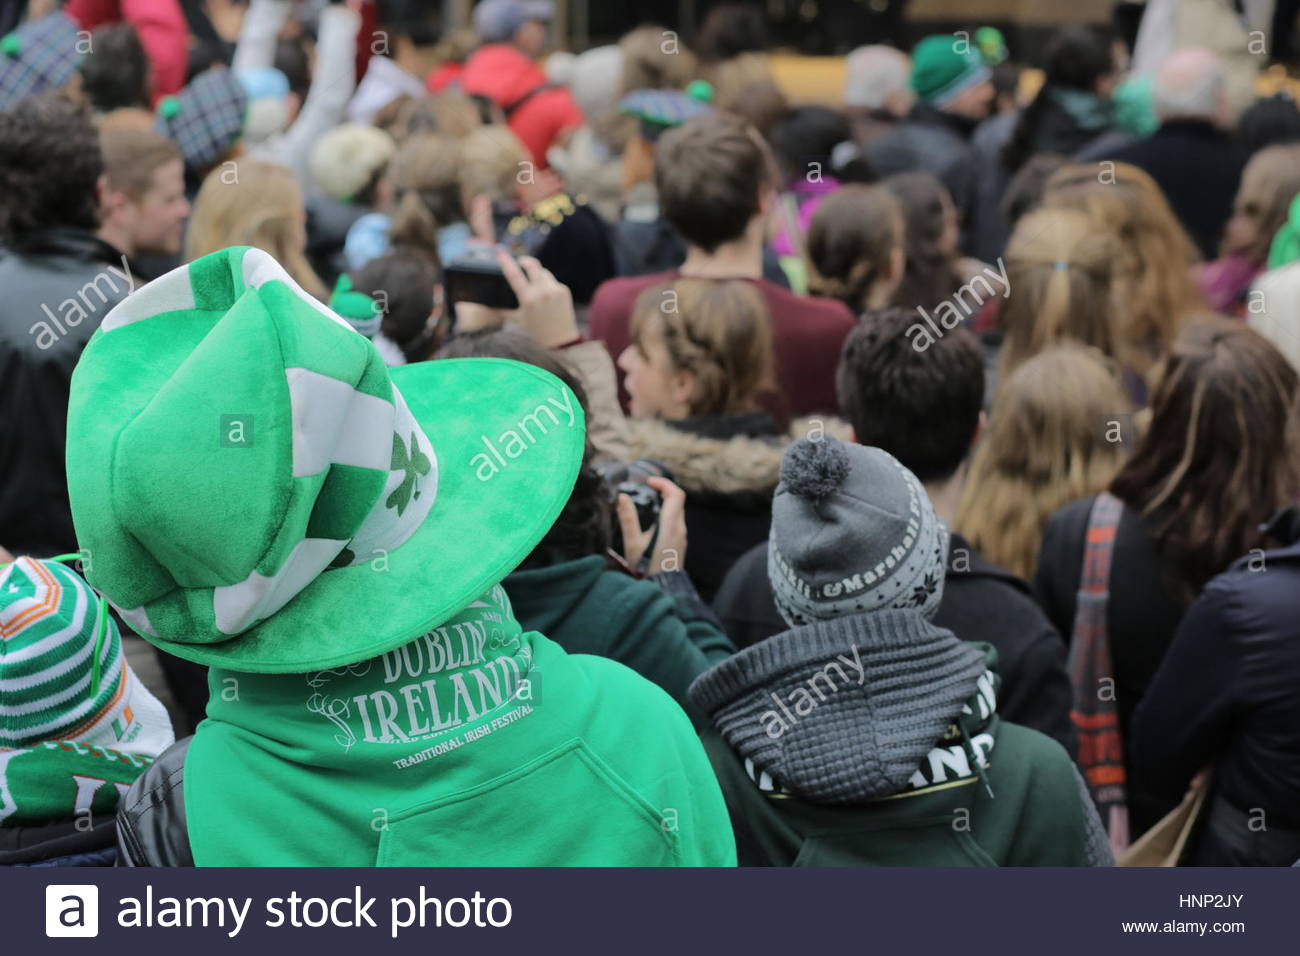 St Patrick's day celebrations in Dublin ireland as the parade starts Stock Photo